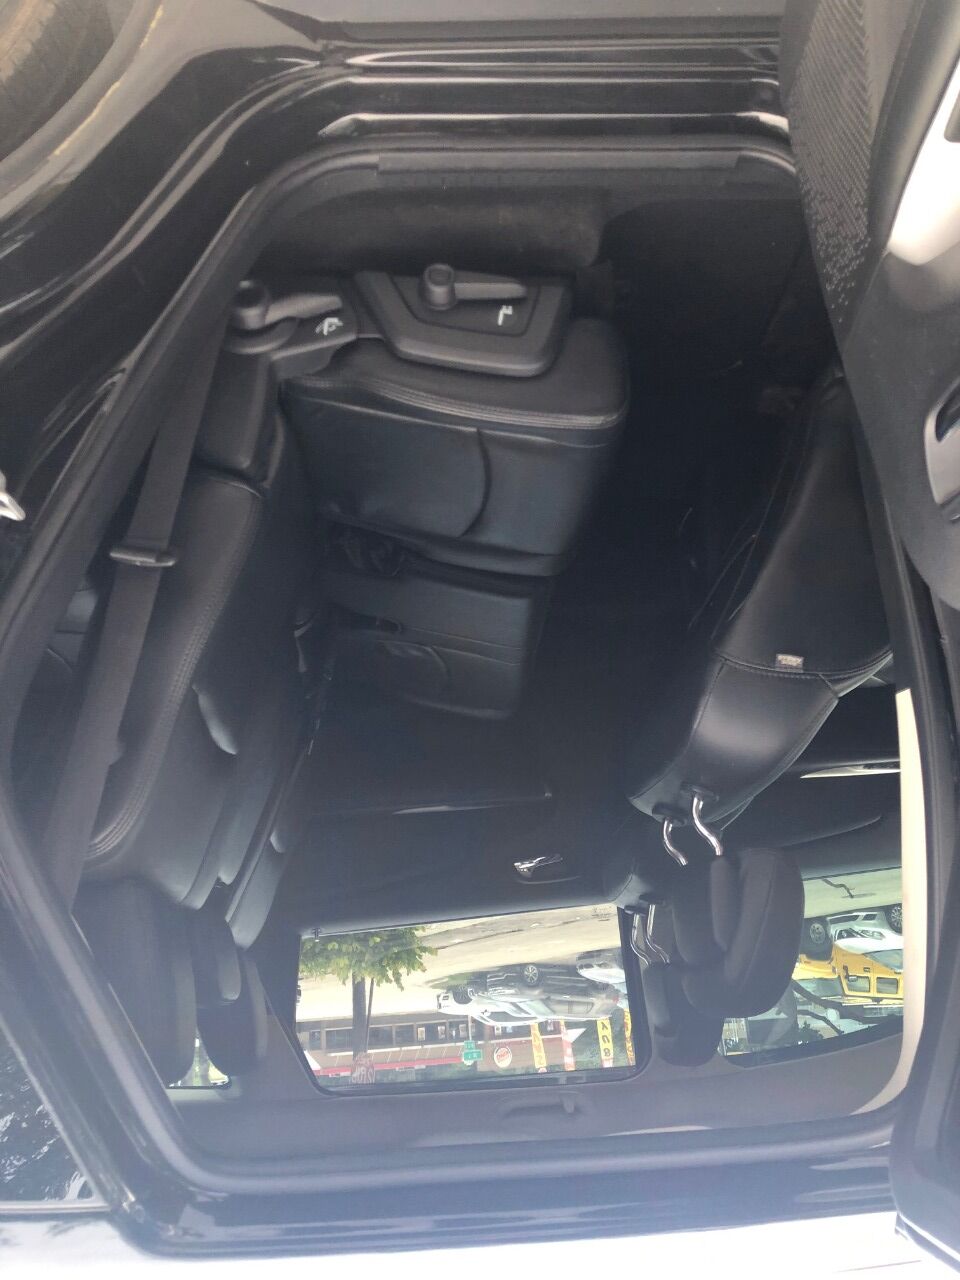 2018 DODGE Journey SUV / Crossover - $11,500